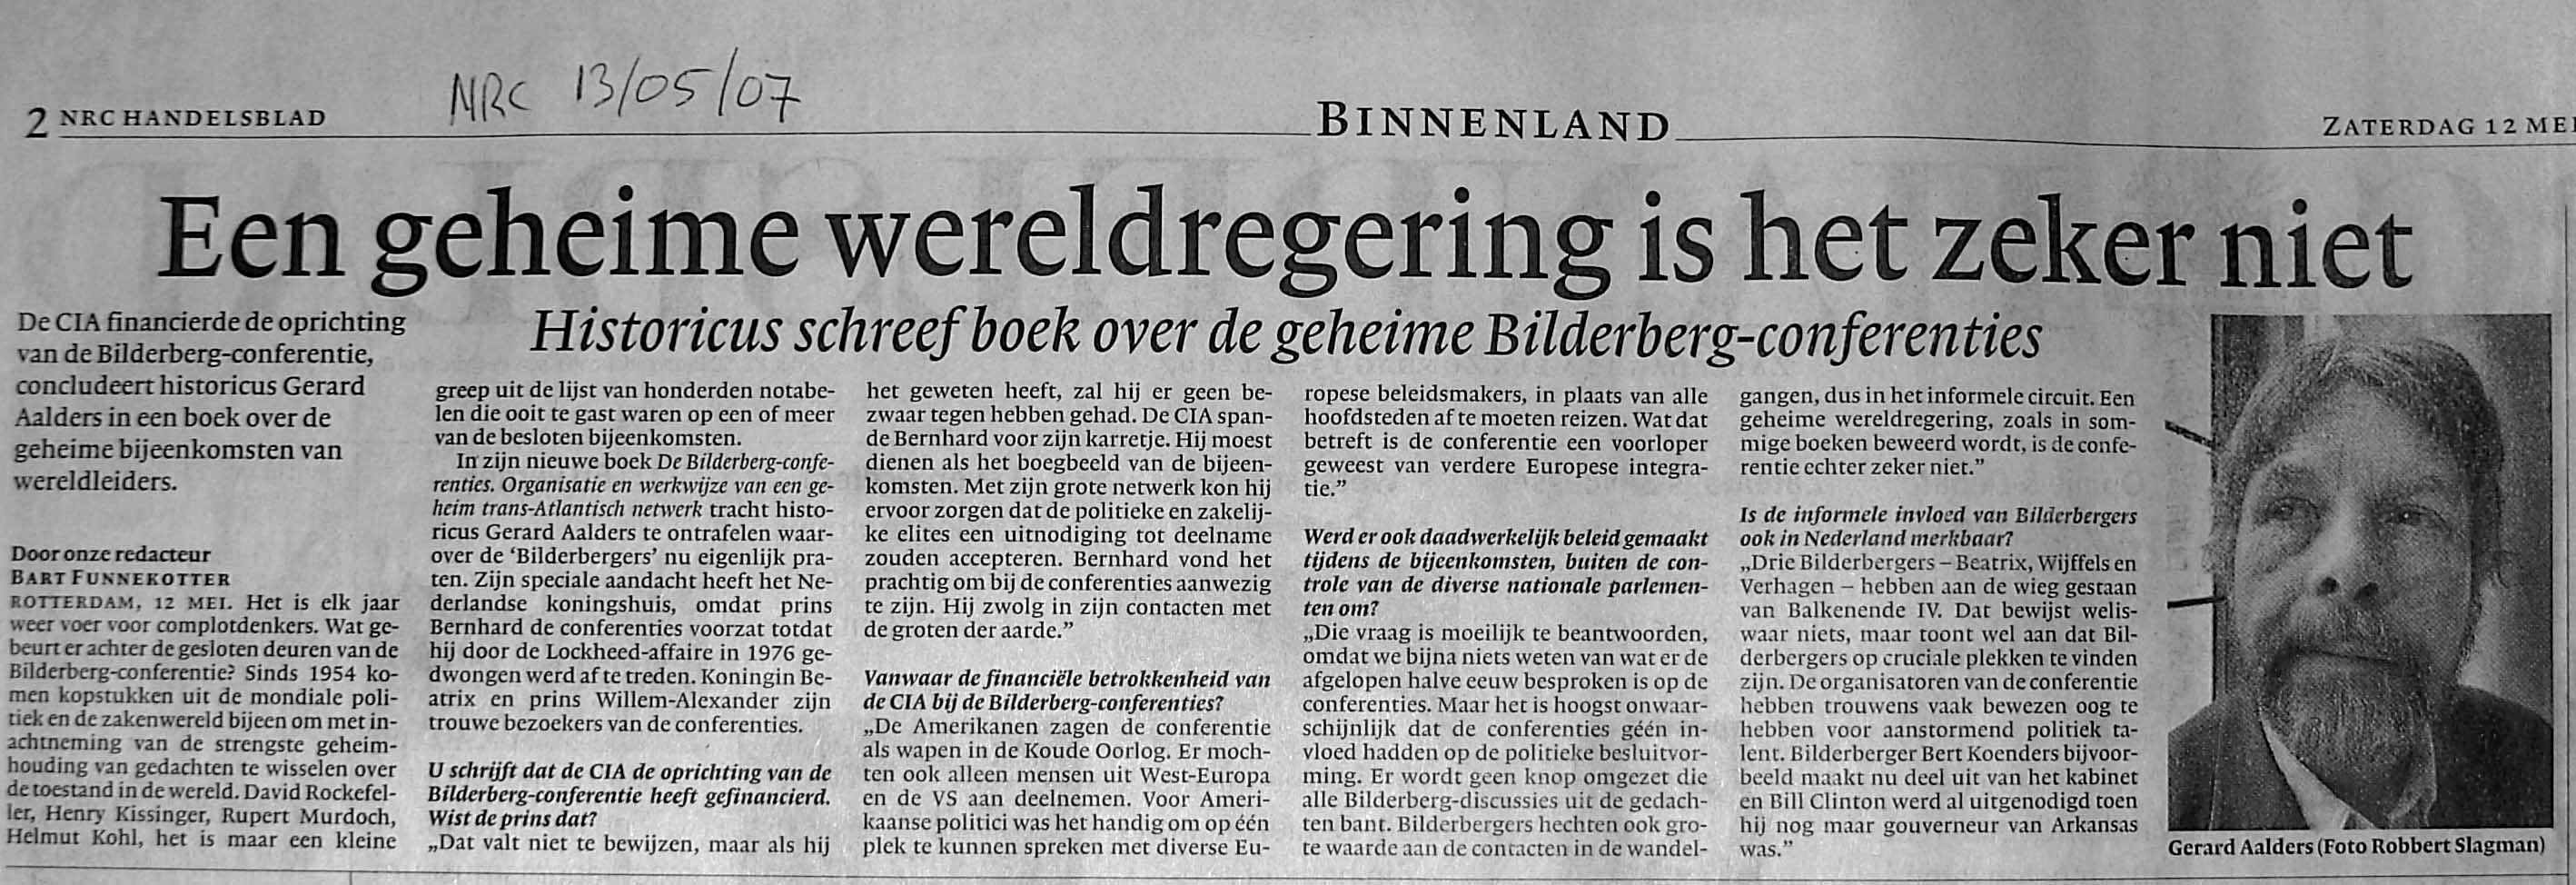 Bilderberg in het NRC Handelsblad